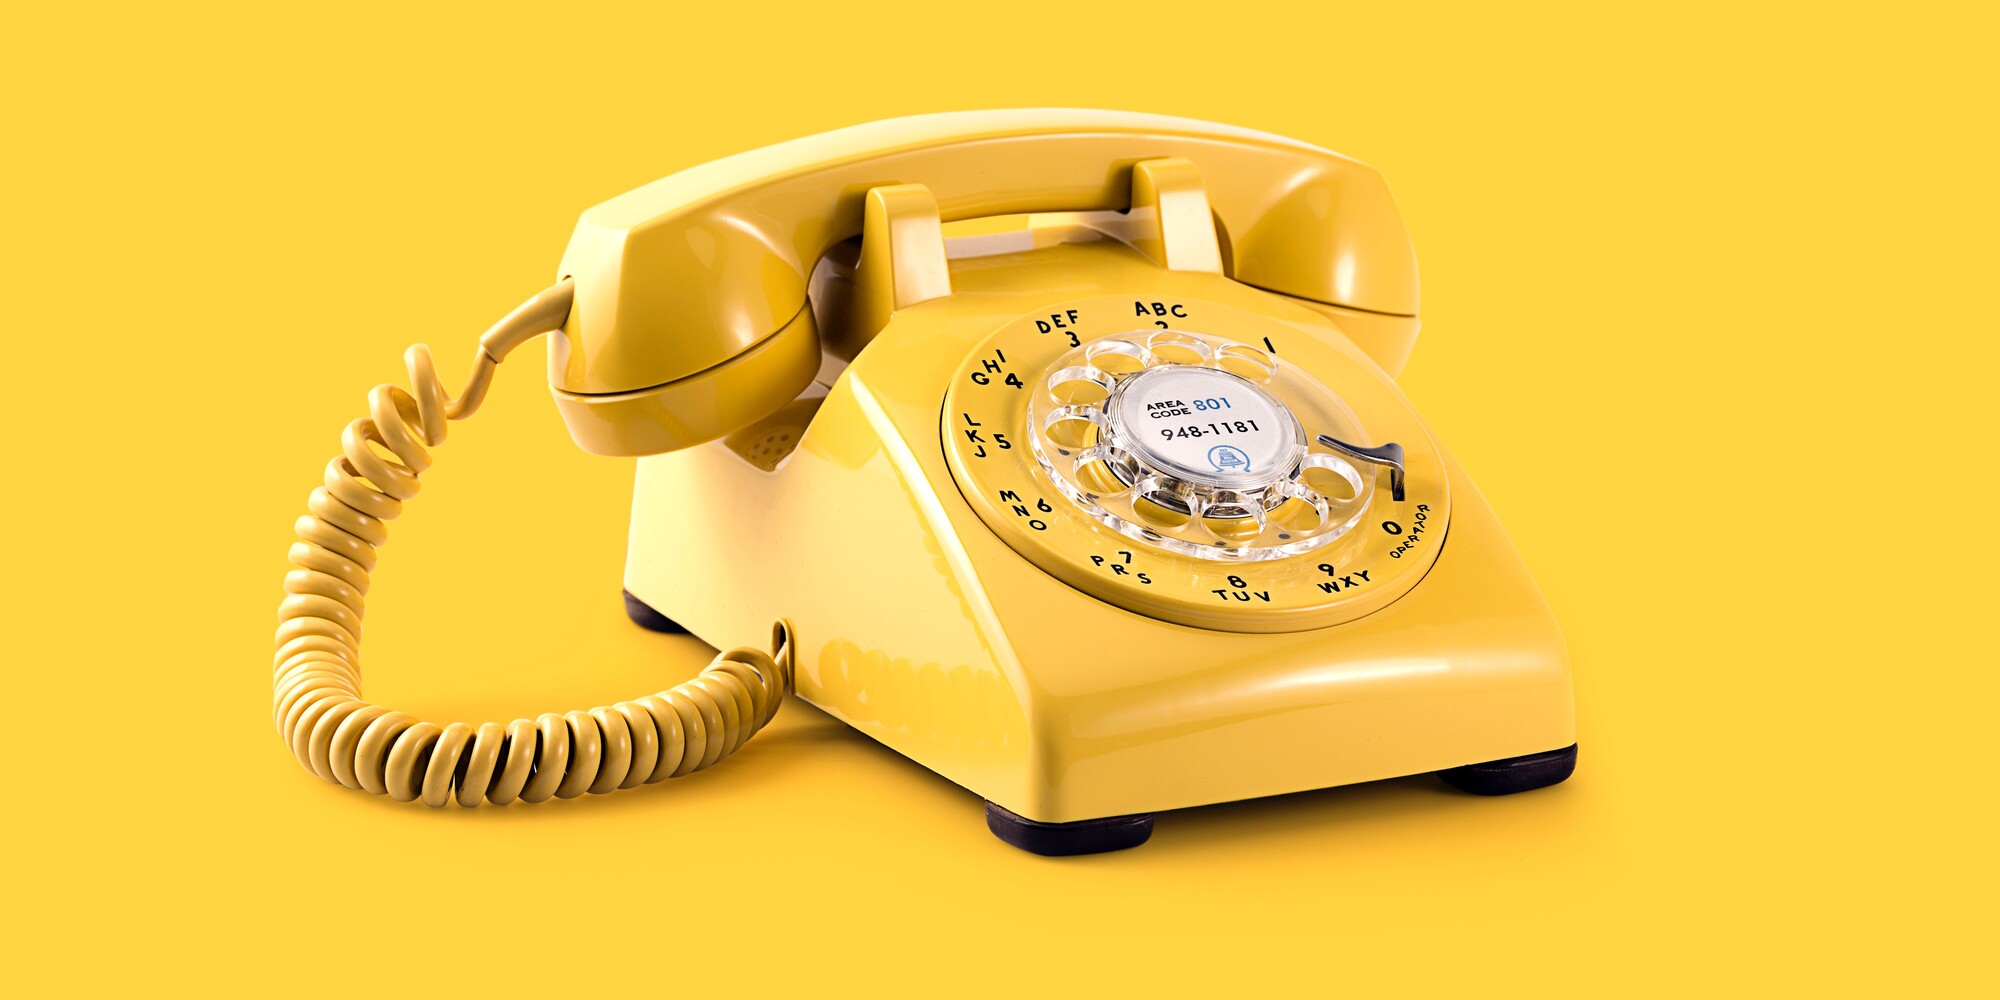 yellow rotary phone on yellow background